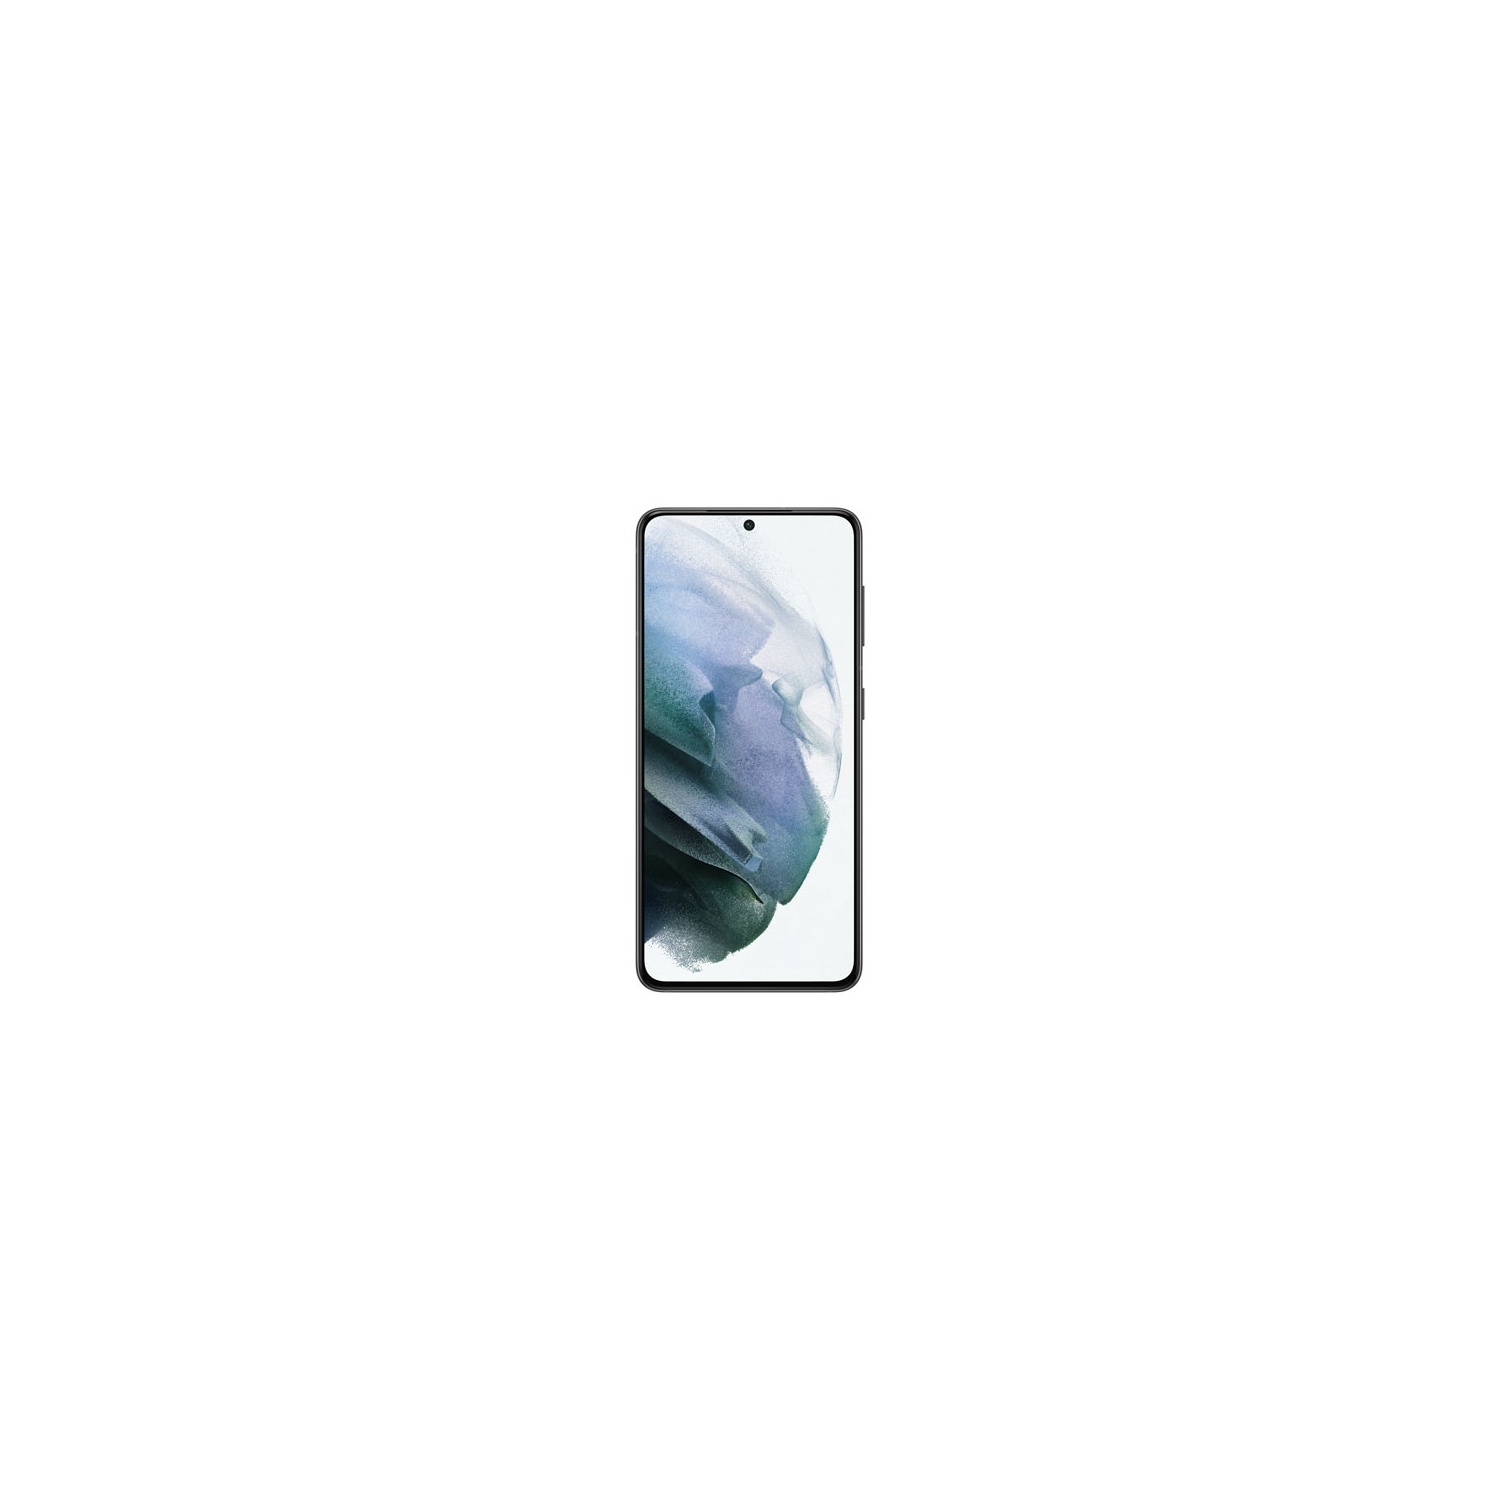 Refurbished (Good) - Samsung Galaxy S21 128GB Smartphone - Phantom Grey - Unlocked